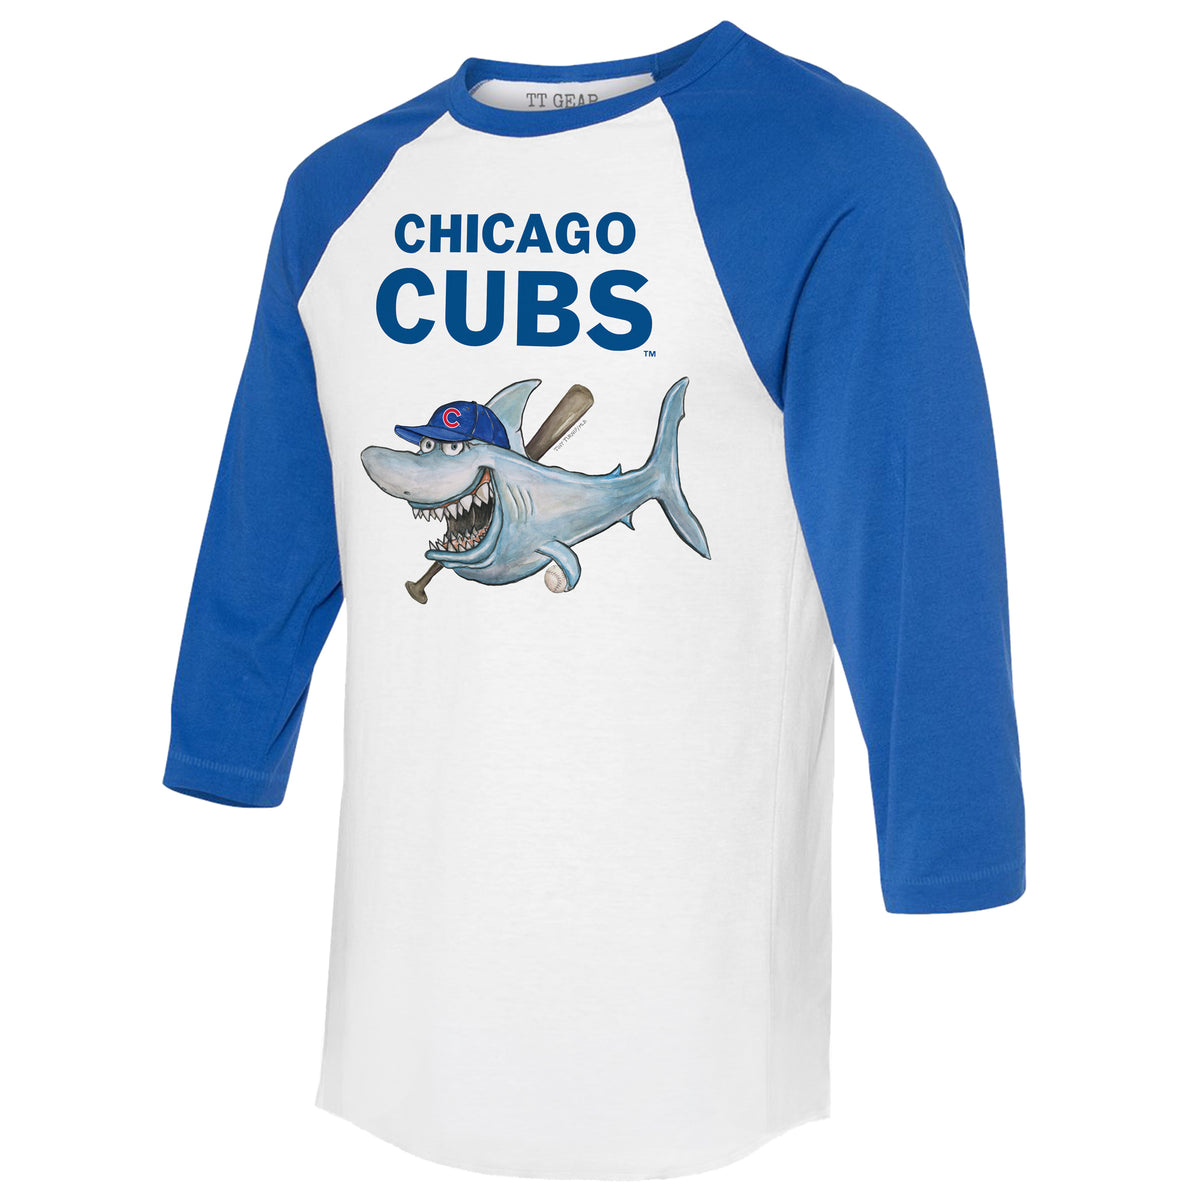 Chicago Cubs Shark 3/4 Royal Blue Sleeve Raglan